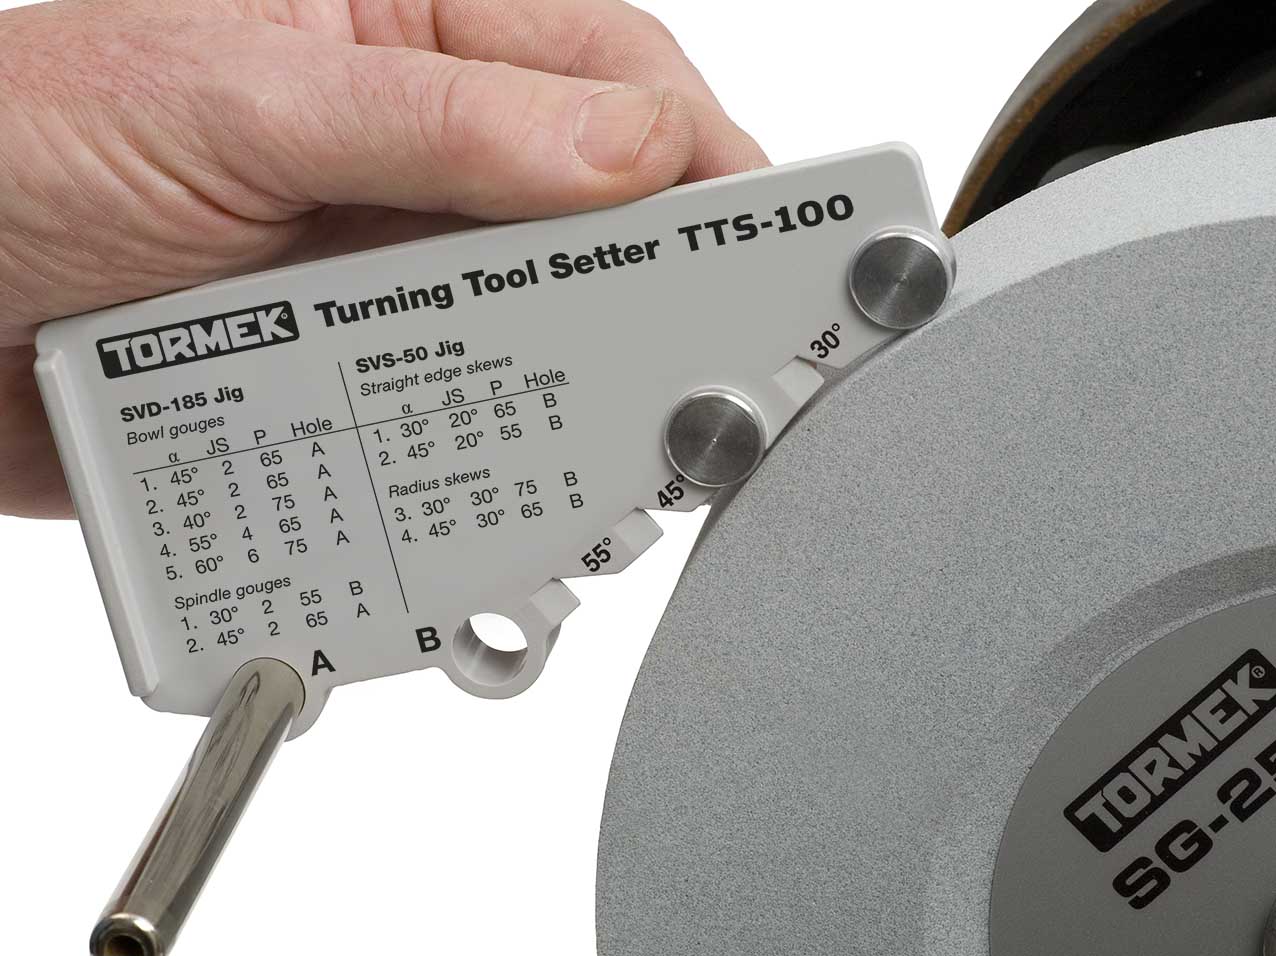 Tormek Turning Tool Setter TTS-100 Power Tool Services